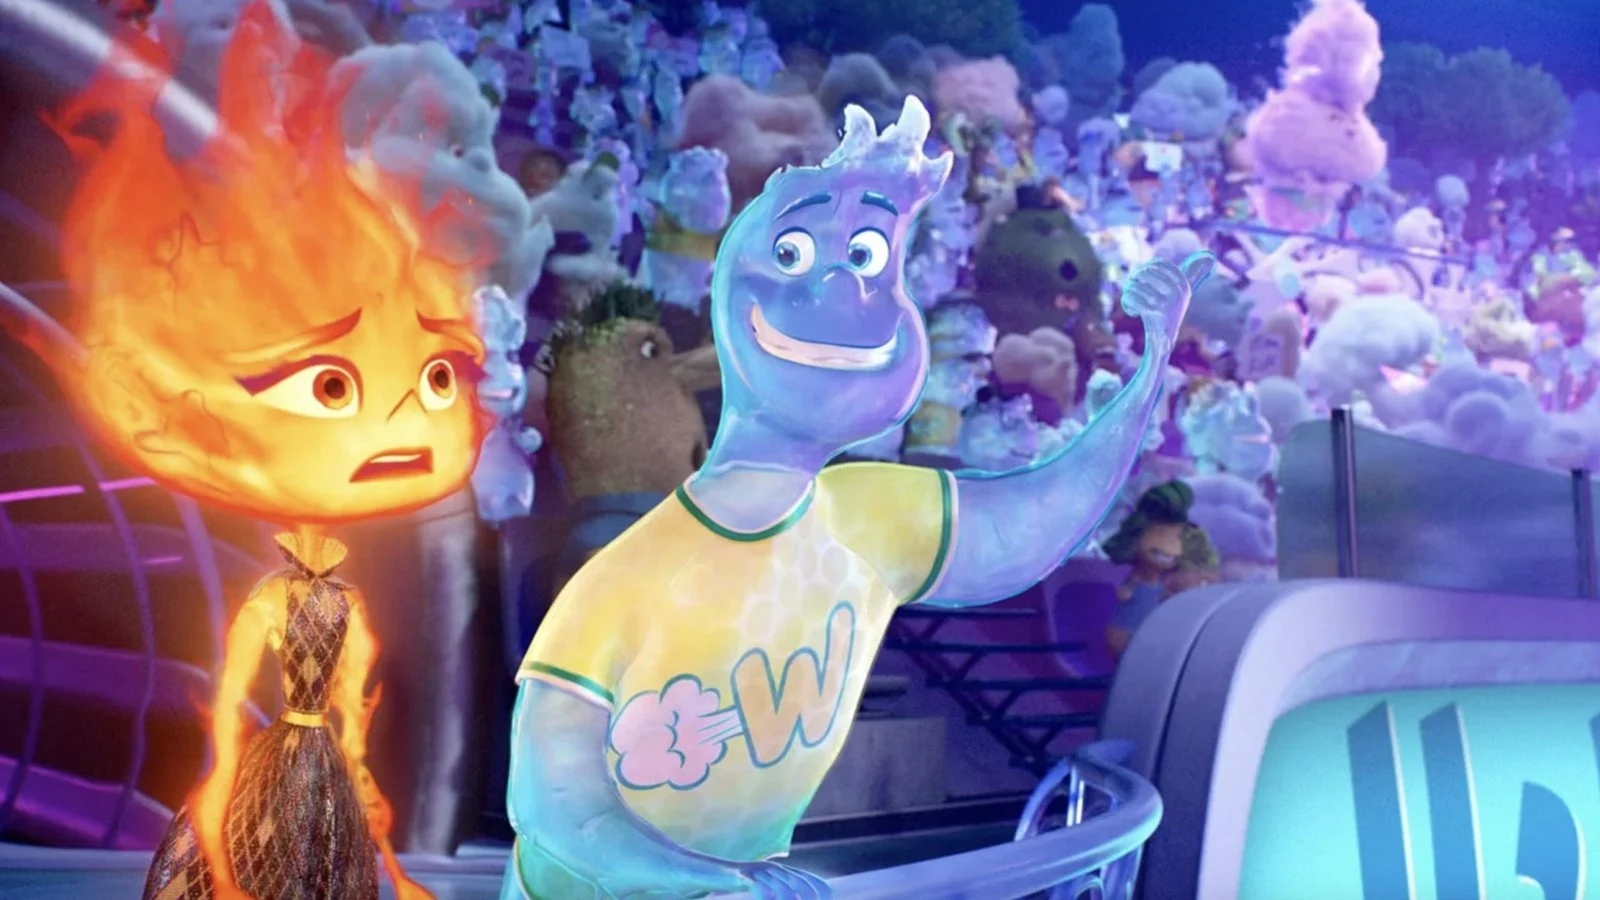 Elemental: come cambieranno i film Pixar dopo la pellicola